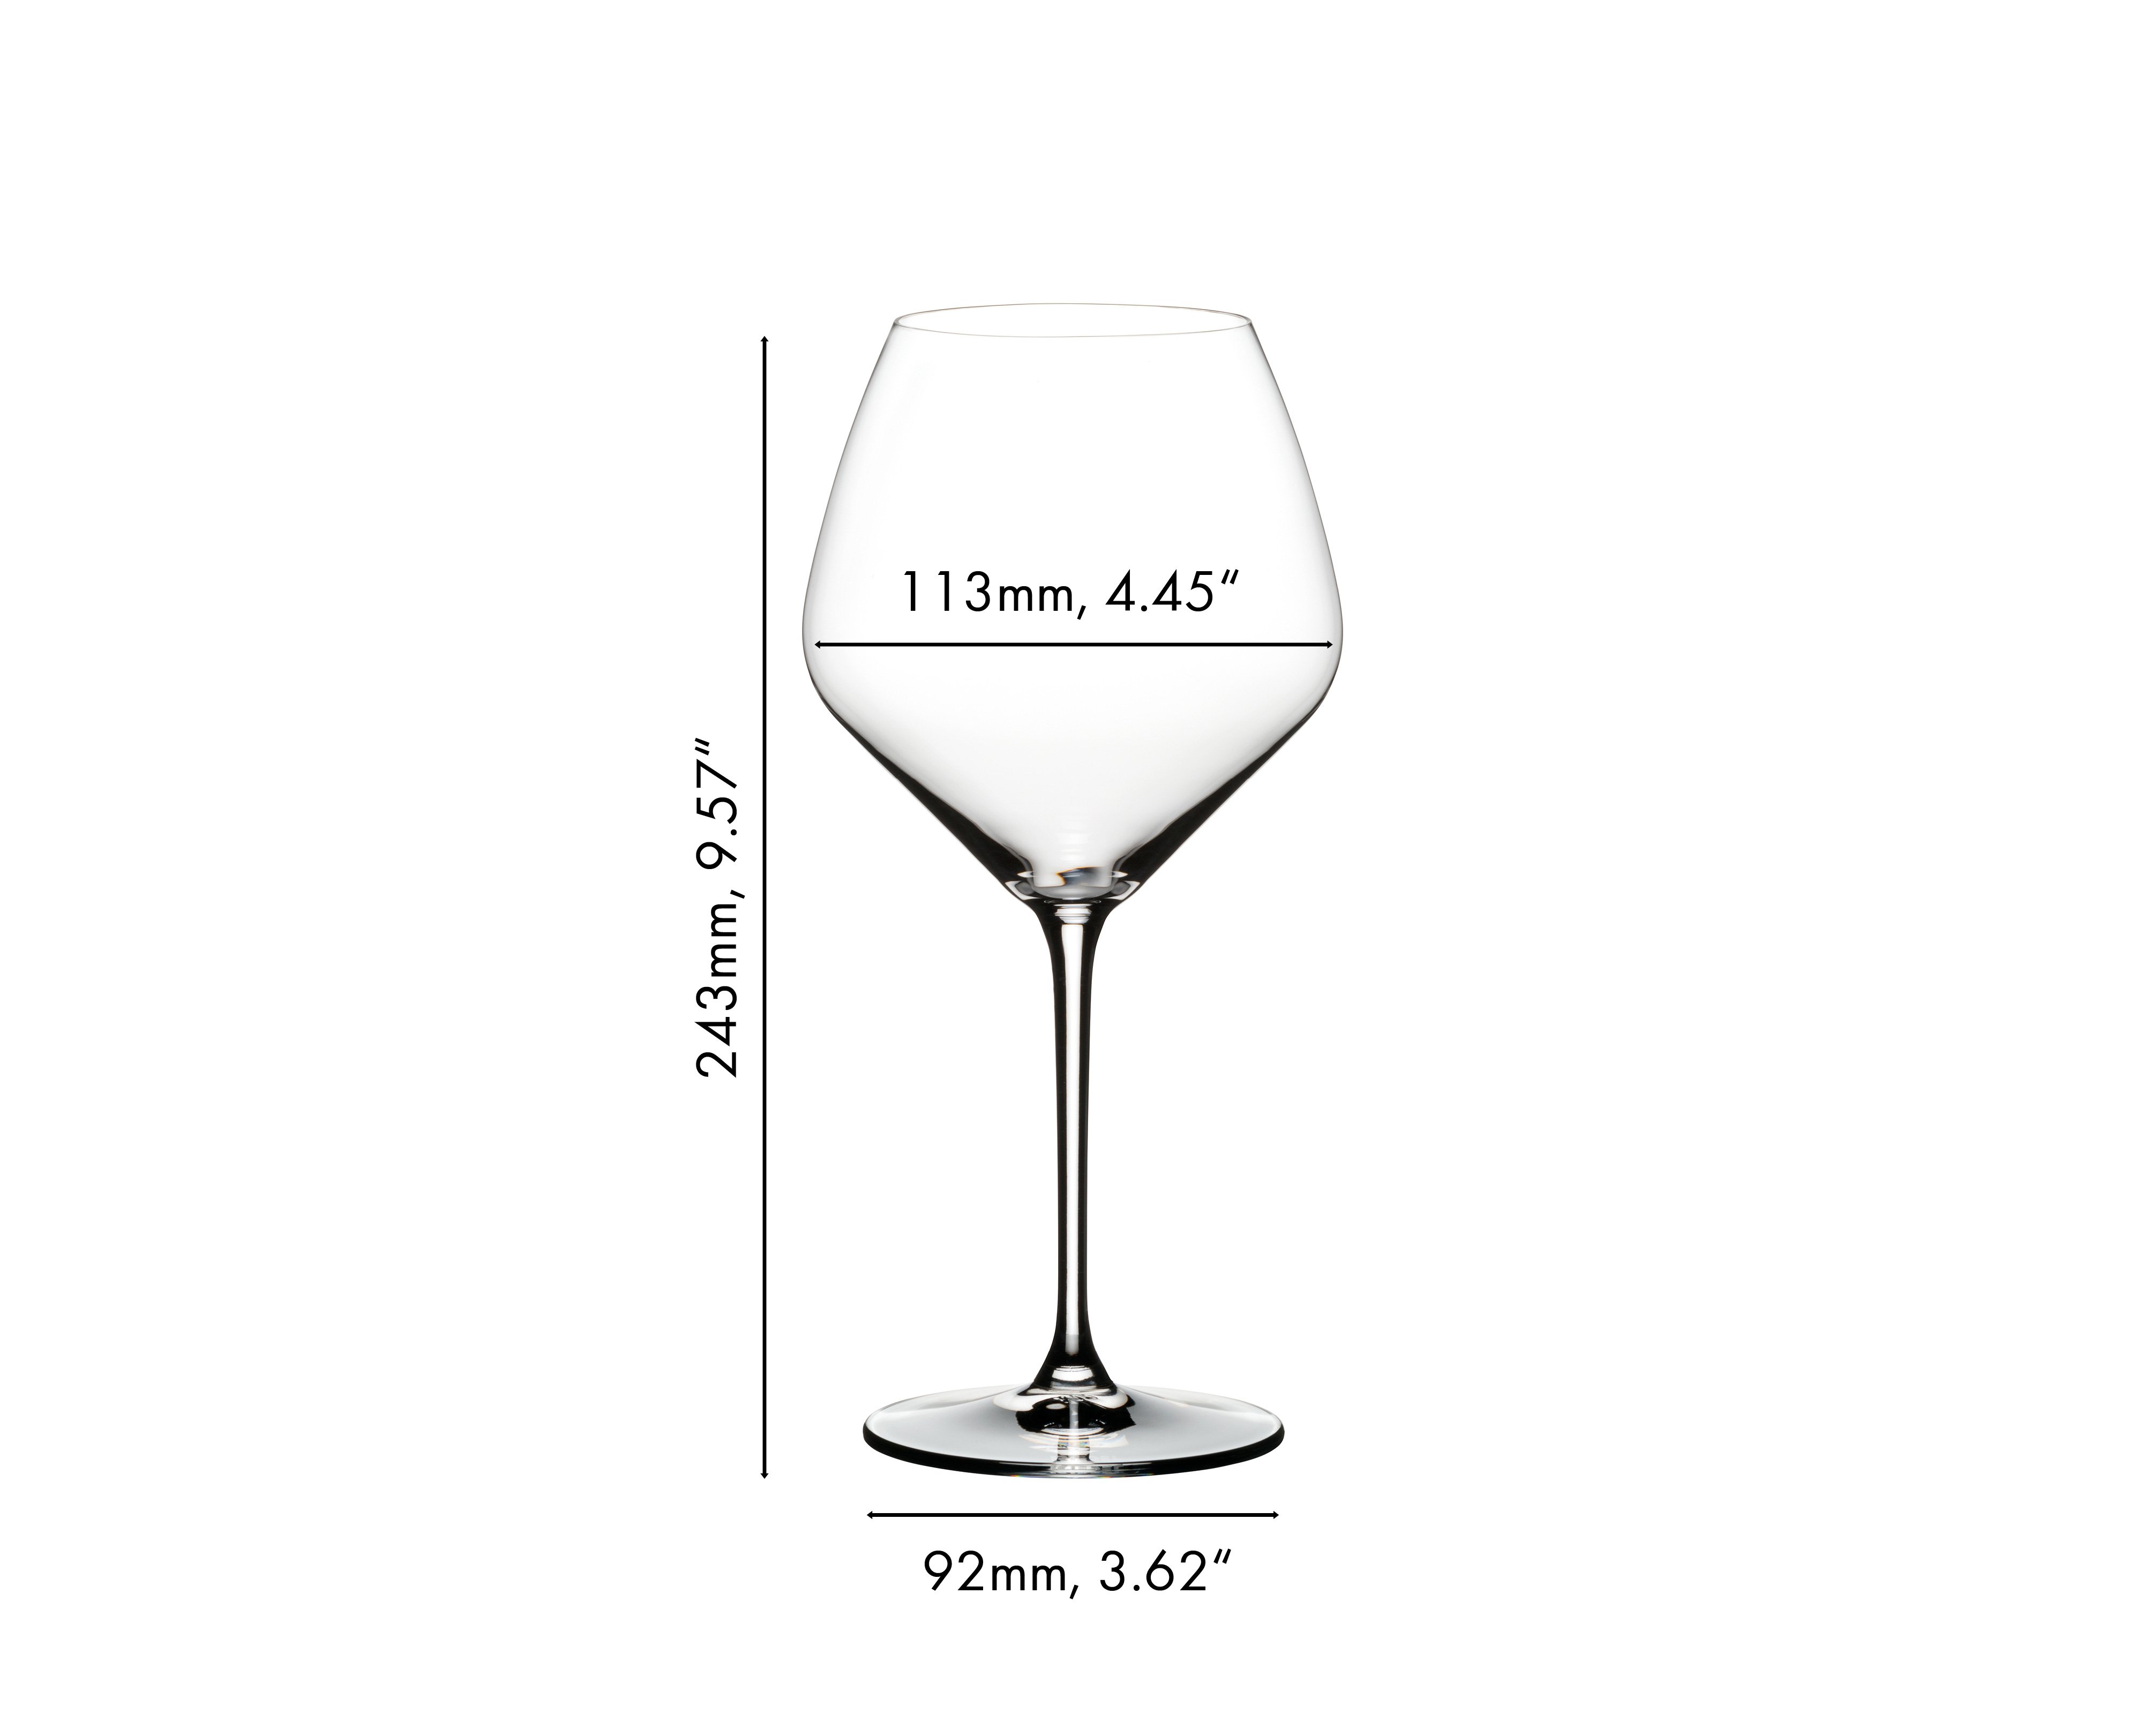 Tyrol Pinot Noir no stem wine glasses by Reidel, set of 3